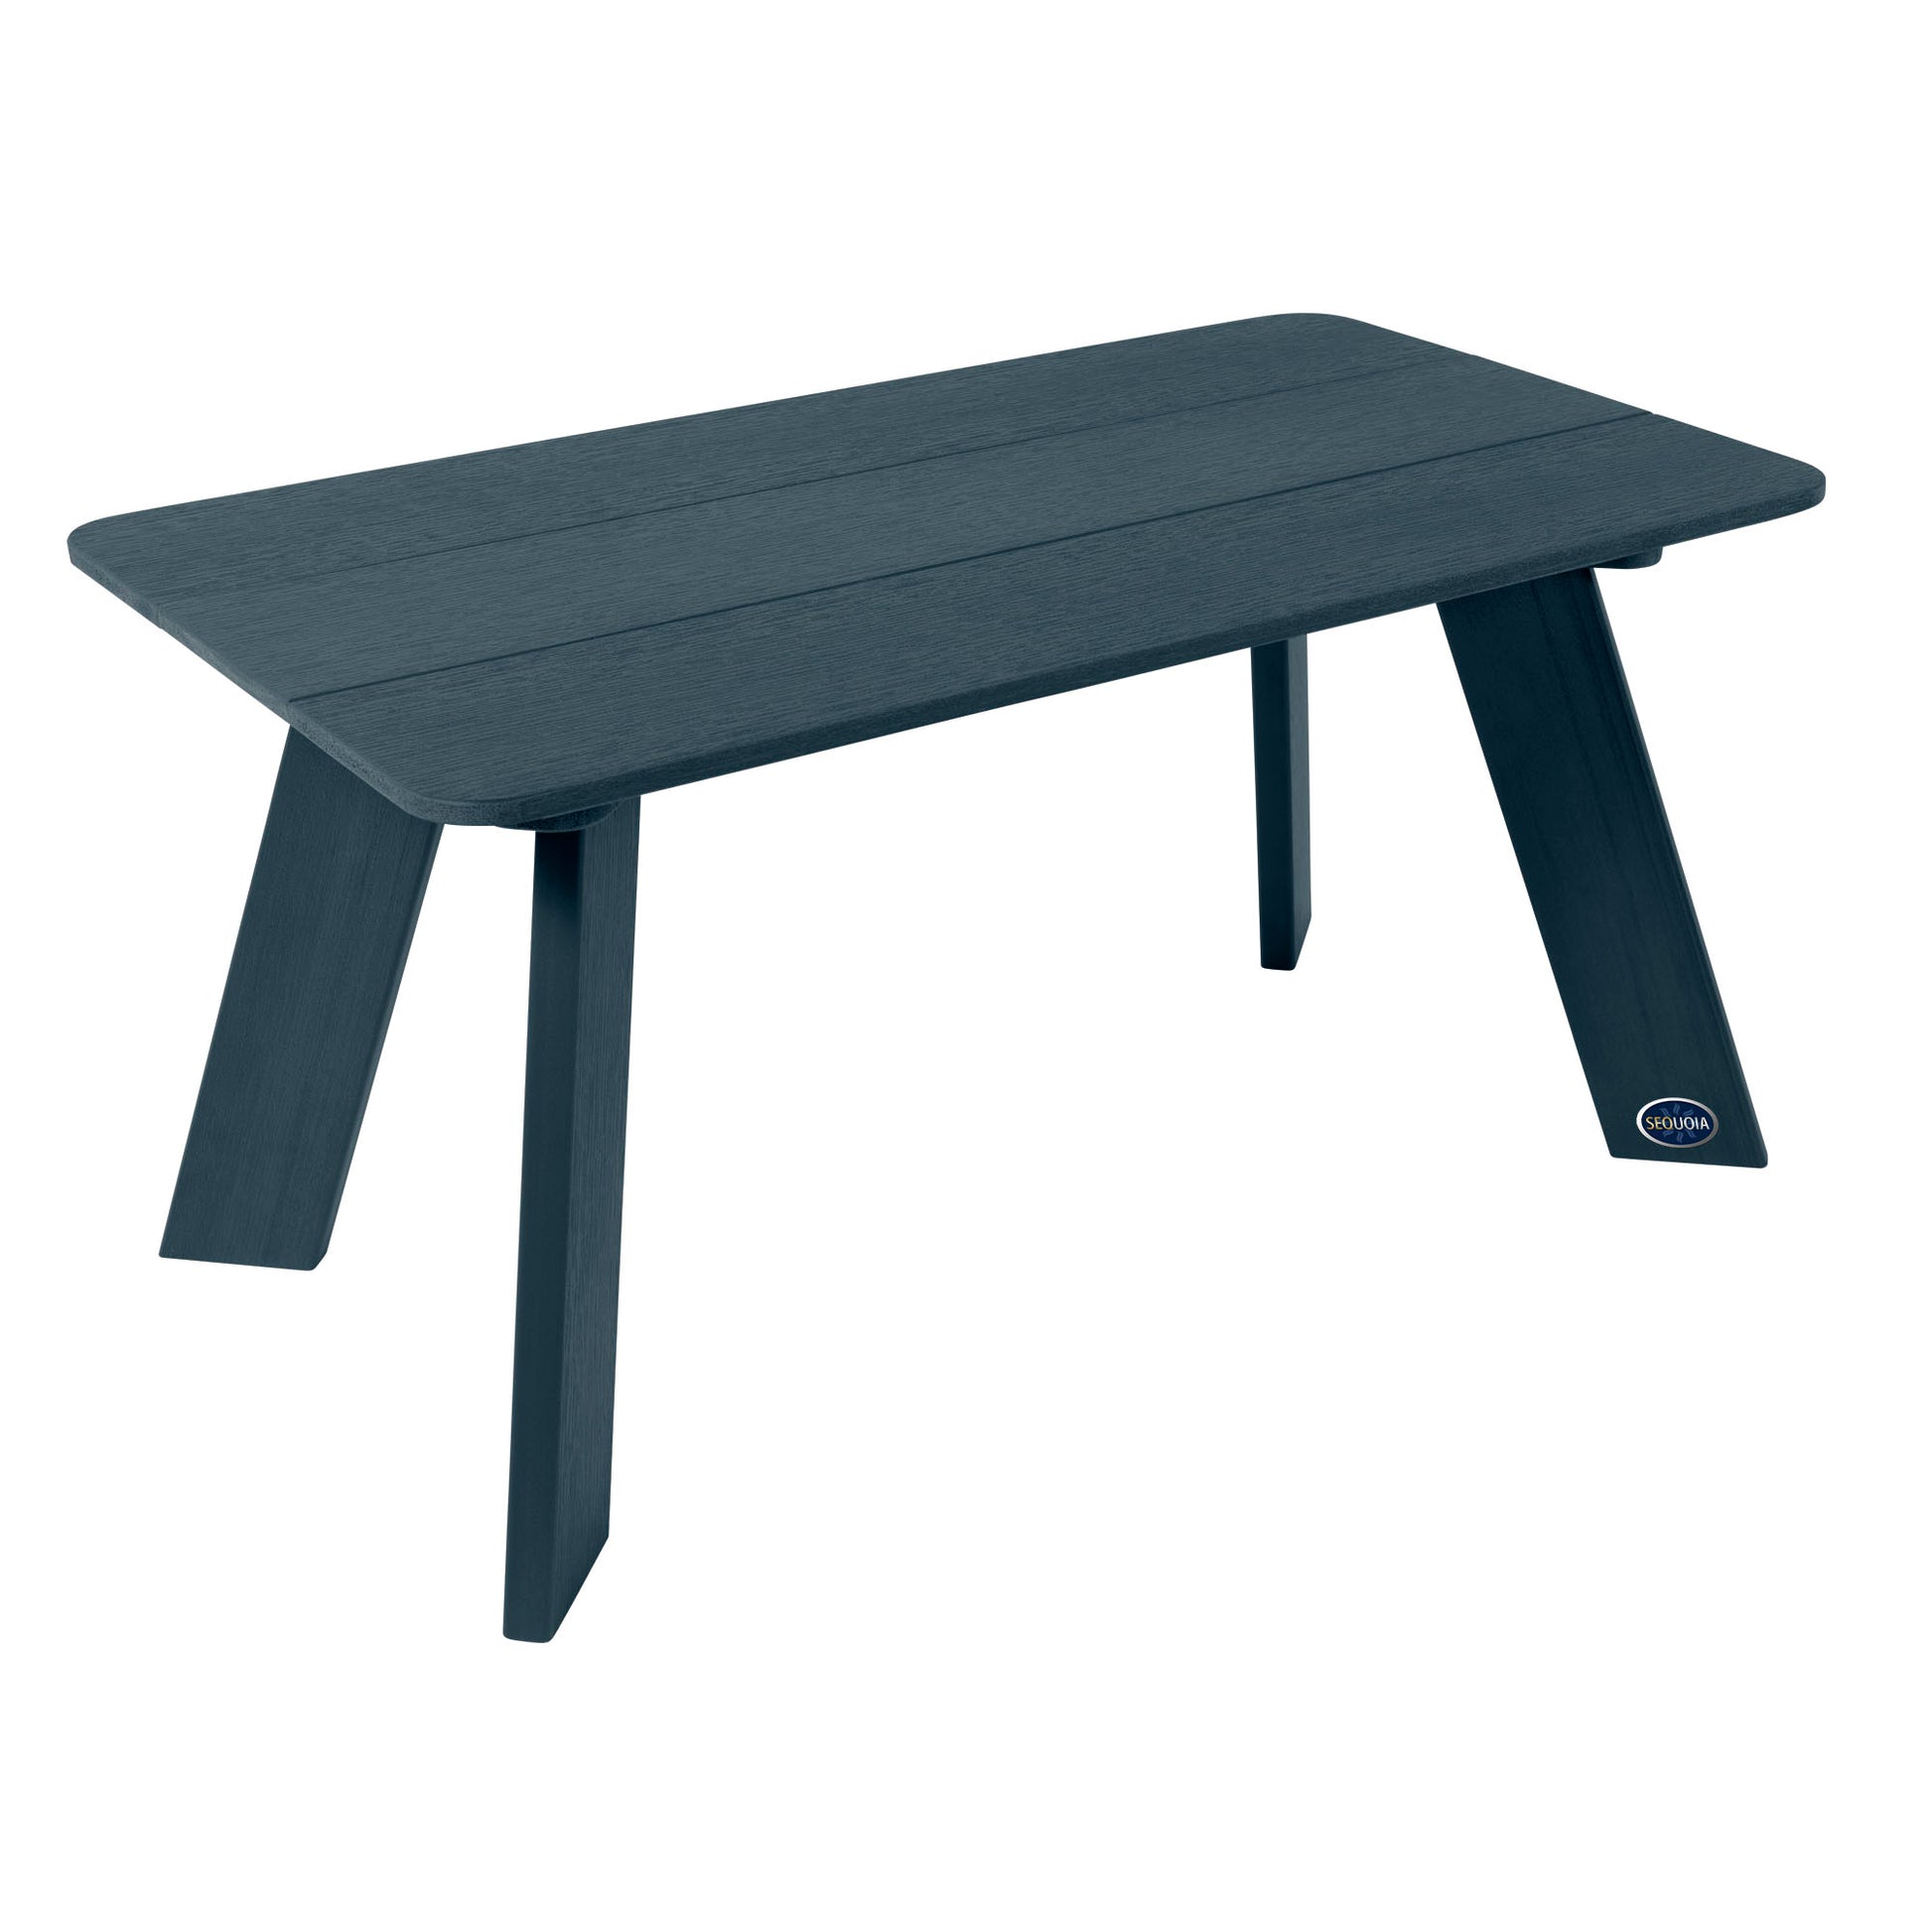 Granite Hills Modern coffee table in Federal Blue